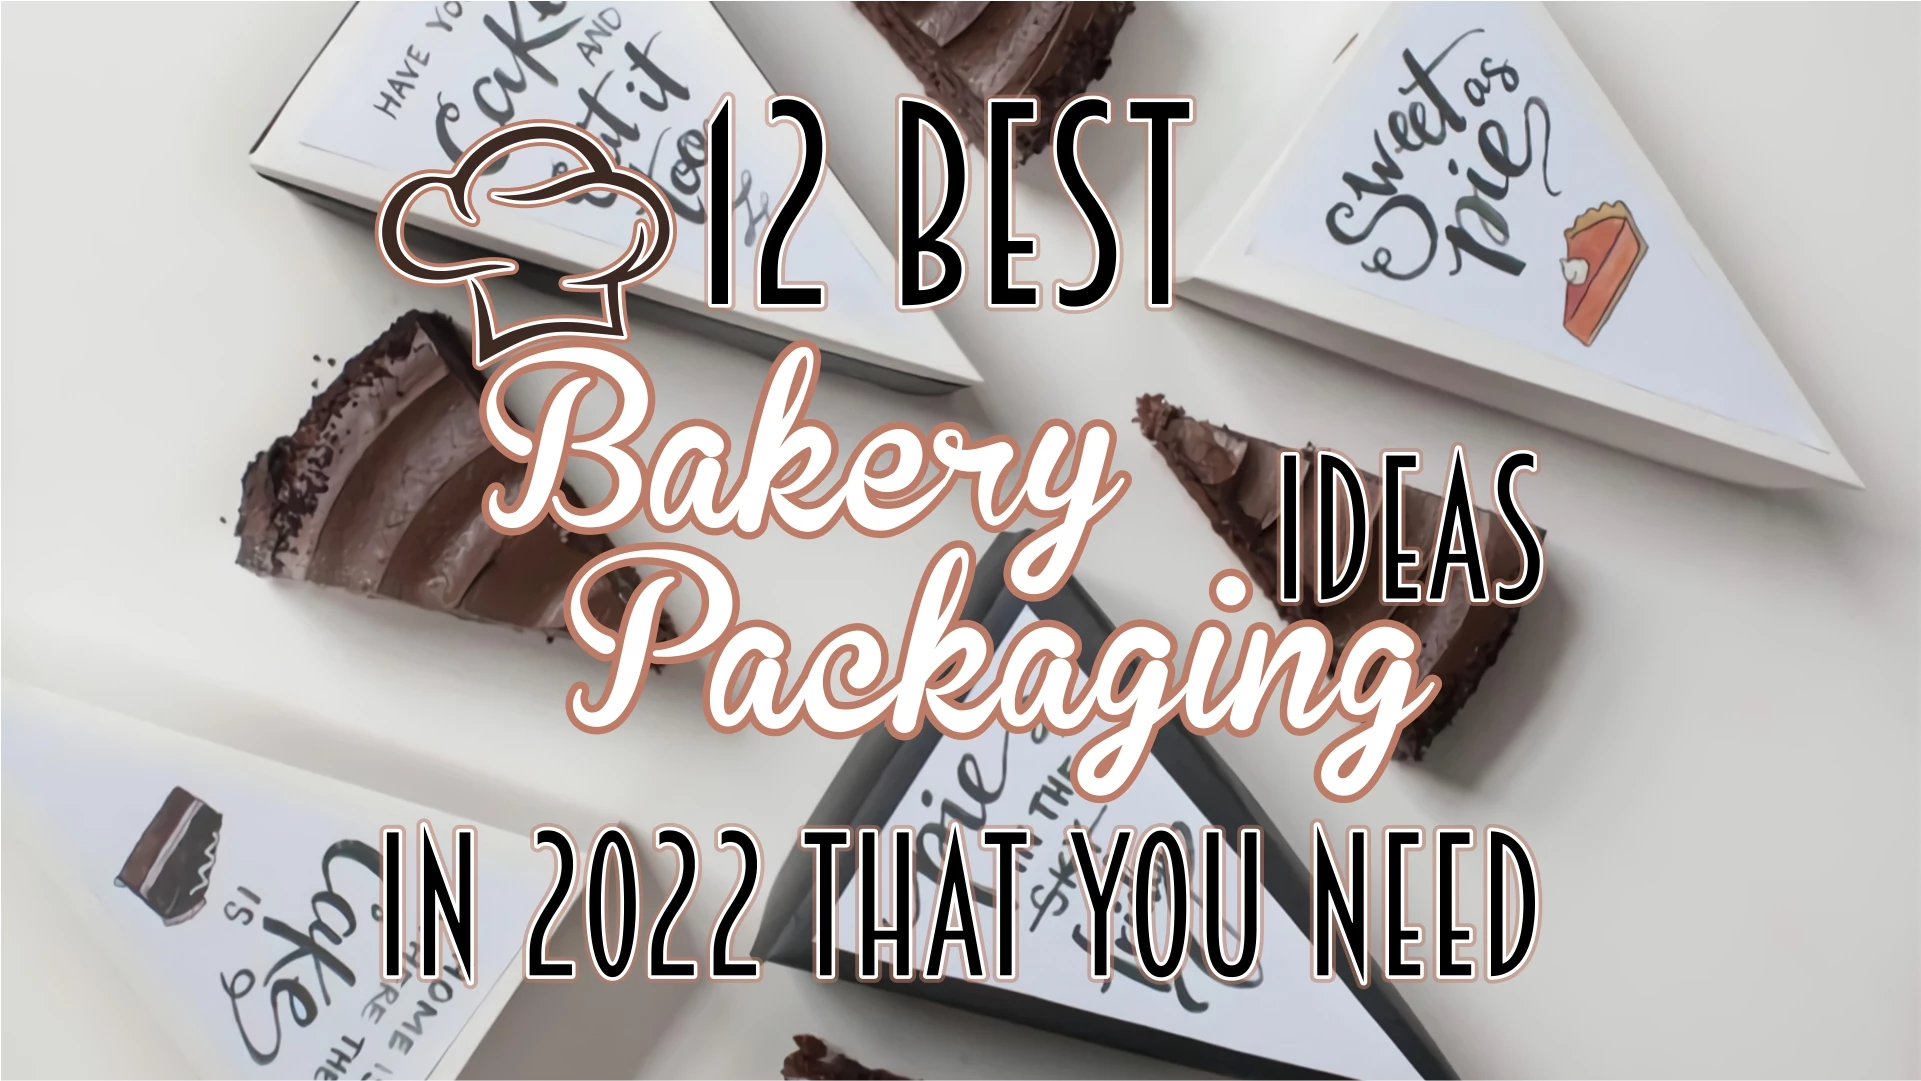 Bakery packaging ideas